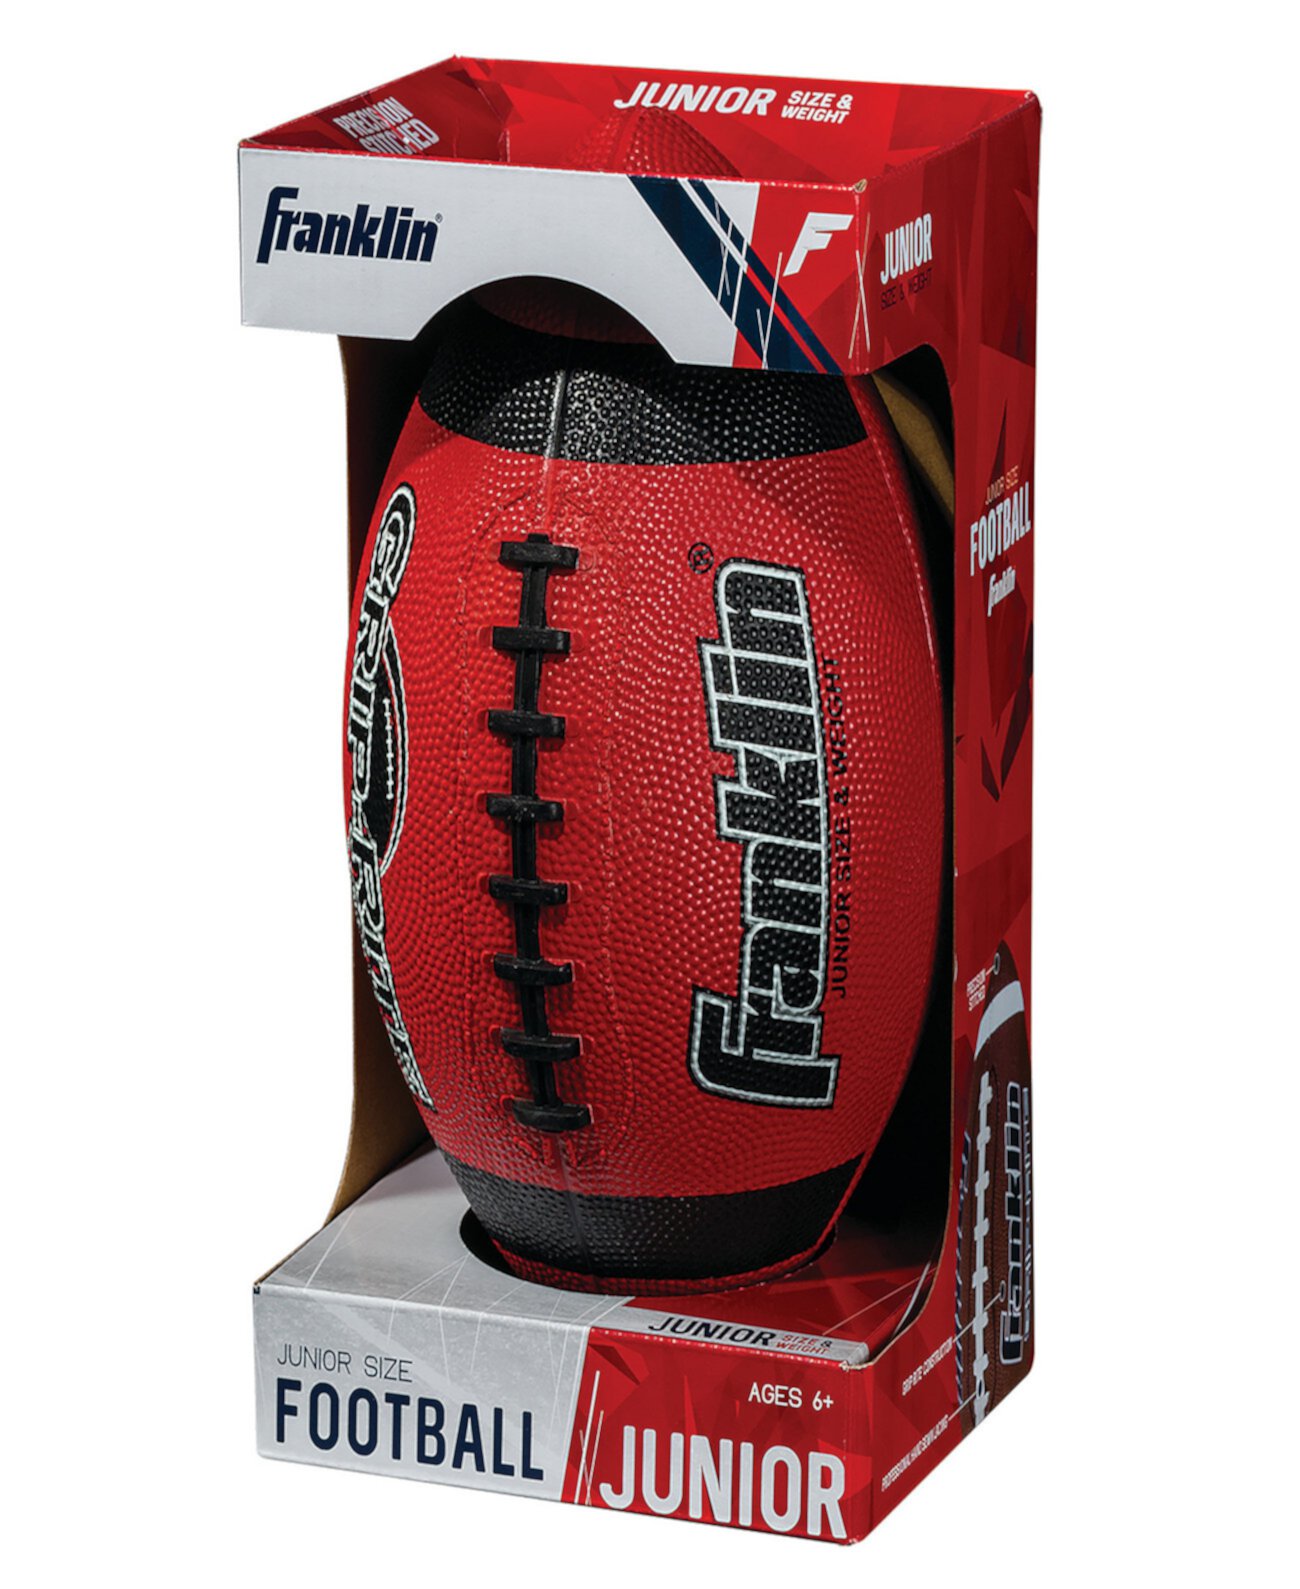 Grip - Rite 100 Rubber Junior Футбольный мяч Franklin Sports